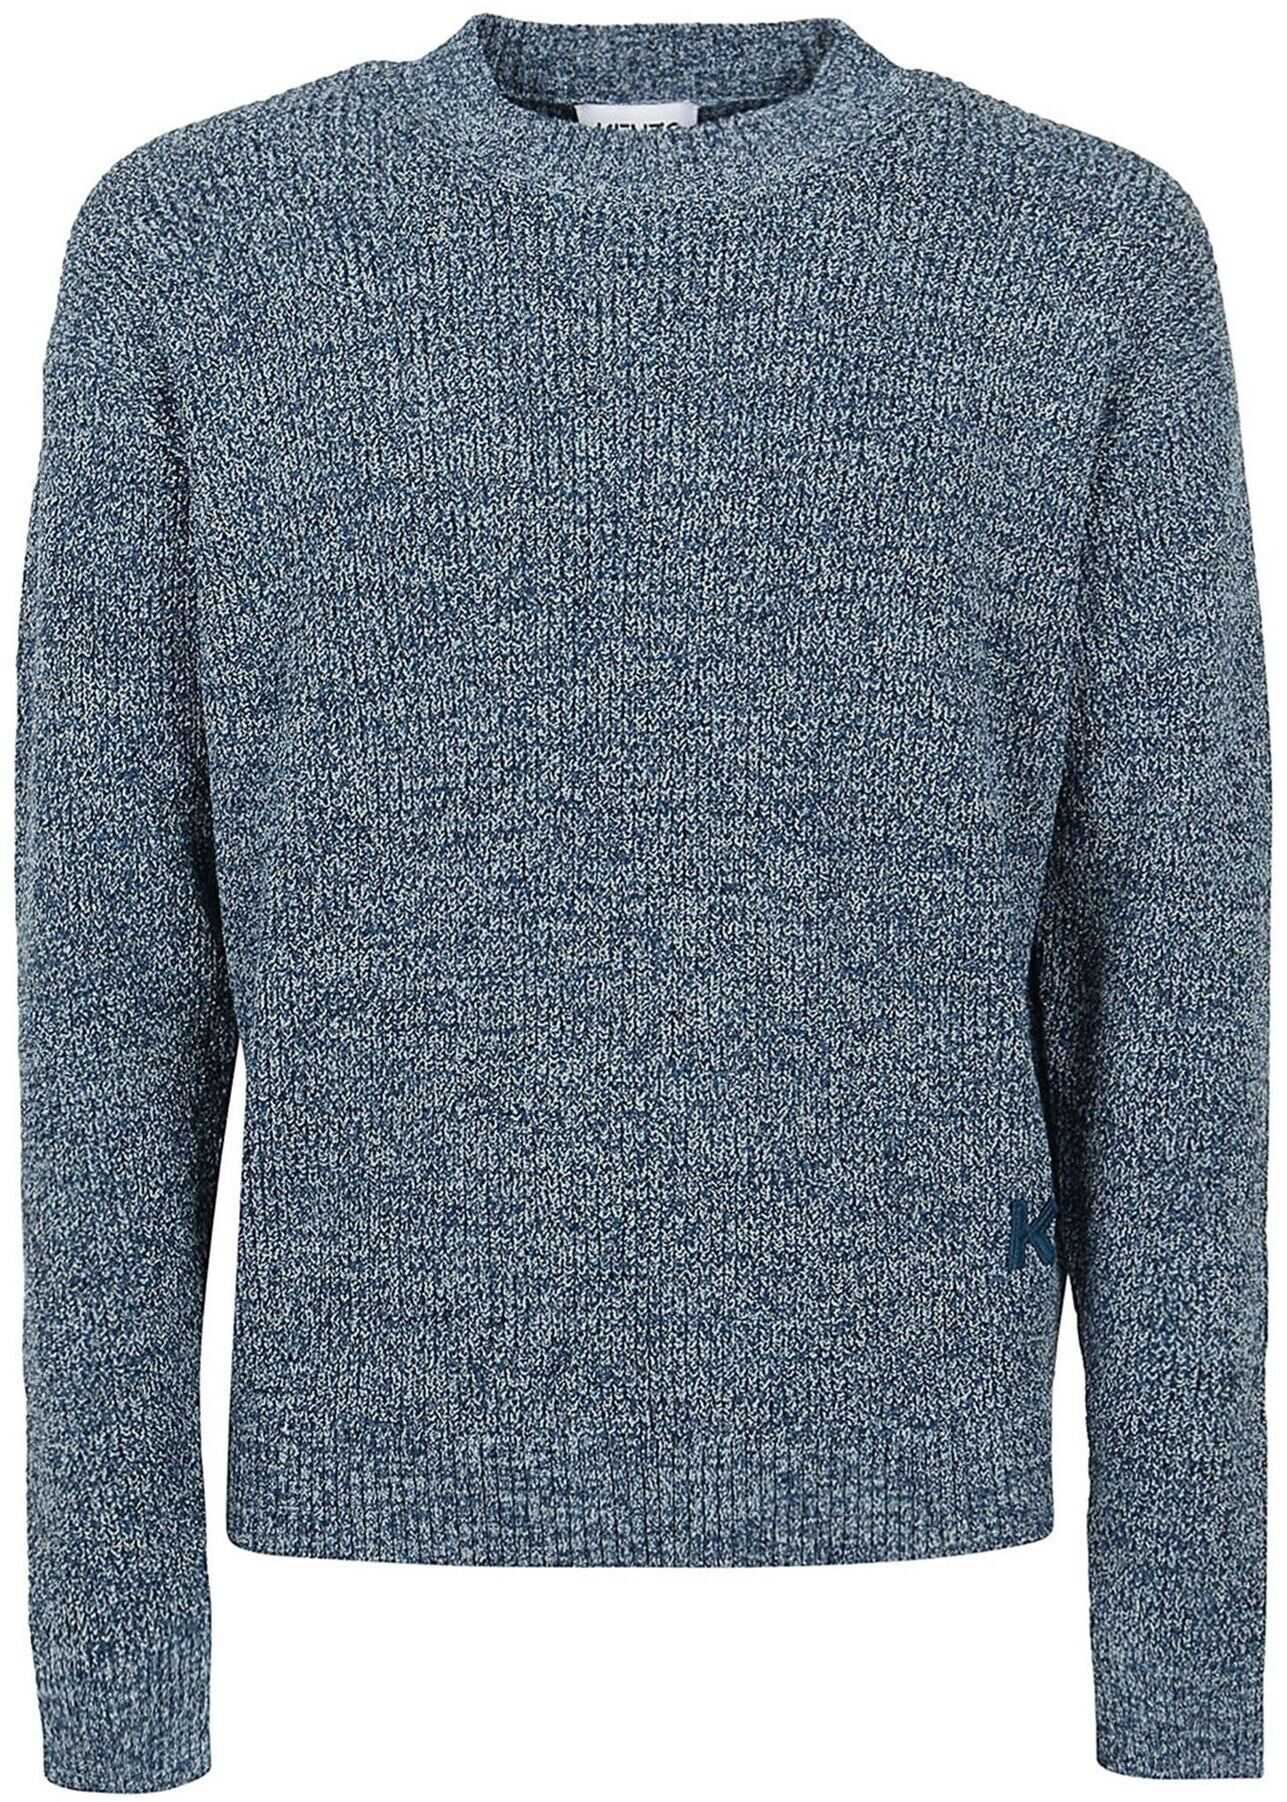 Kenzo Mouliné Cotton Blend Sweater In Light Blue Light Blue